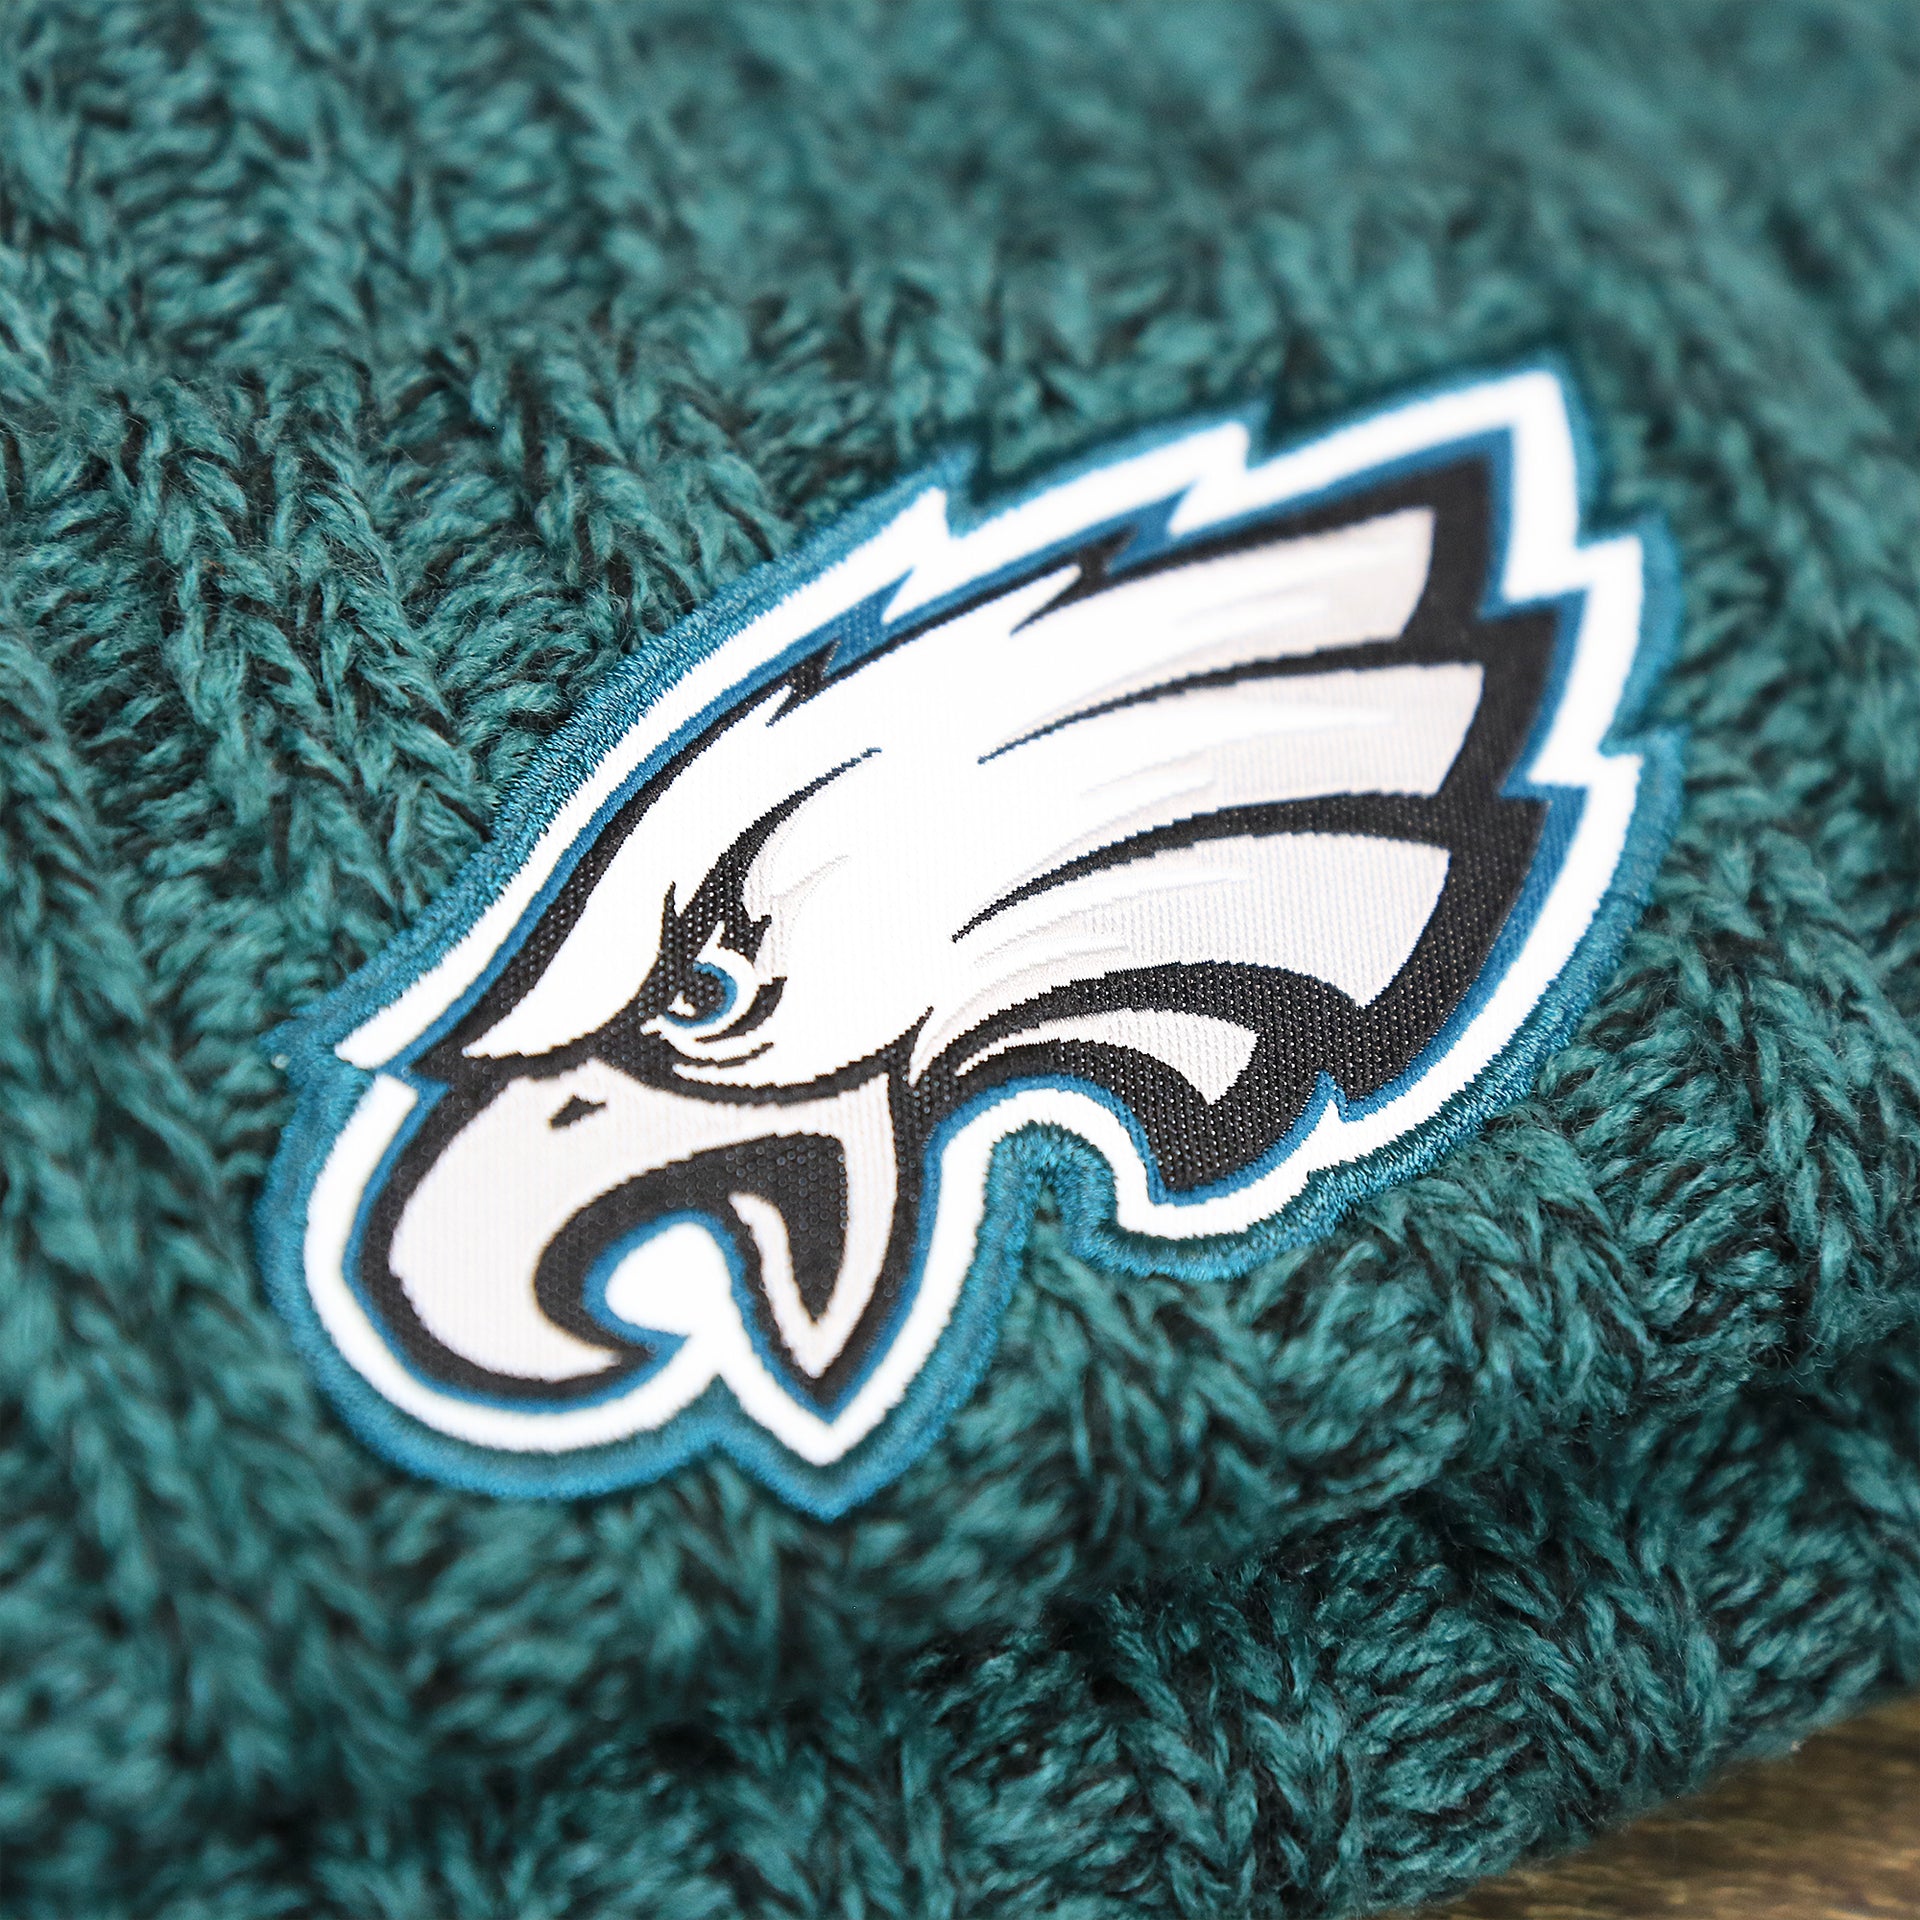 The Eagles Logo on the Women’s Philadelphia Eagles Midnight Green On Field Knit Winter Beanie | Green Winter Beanie